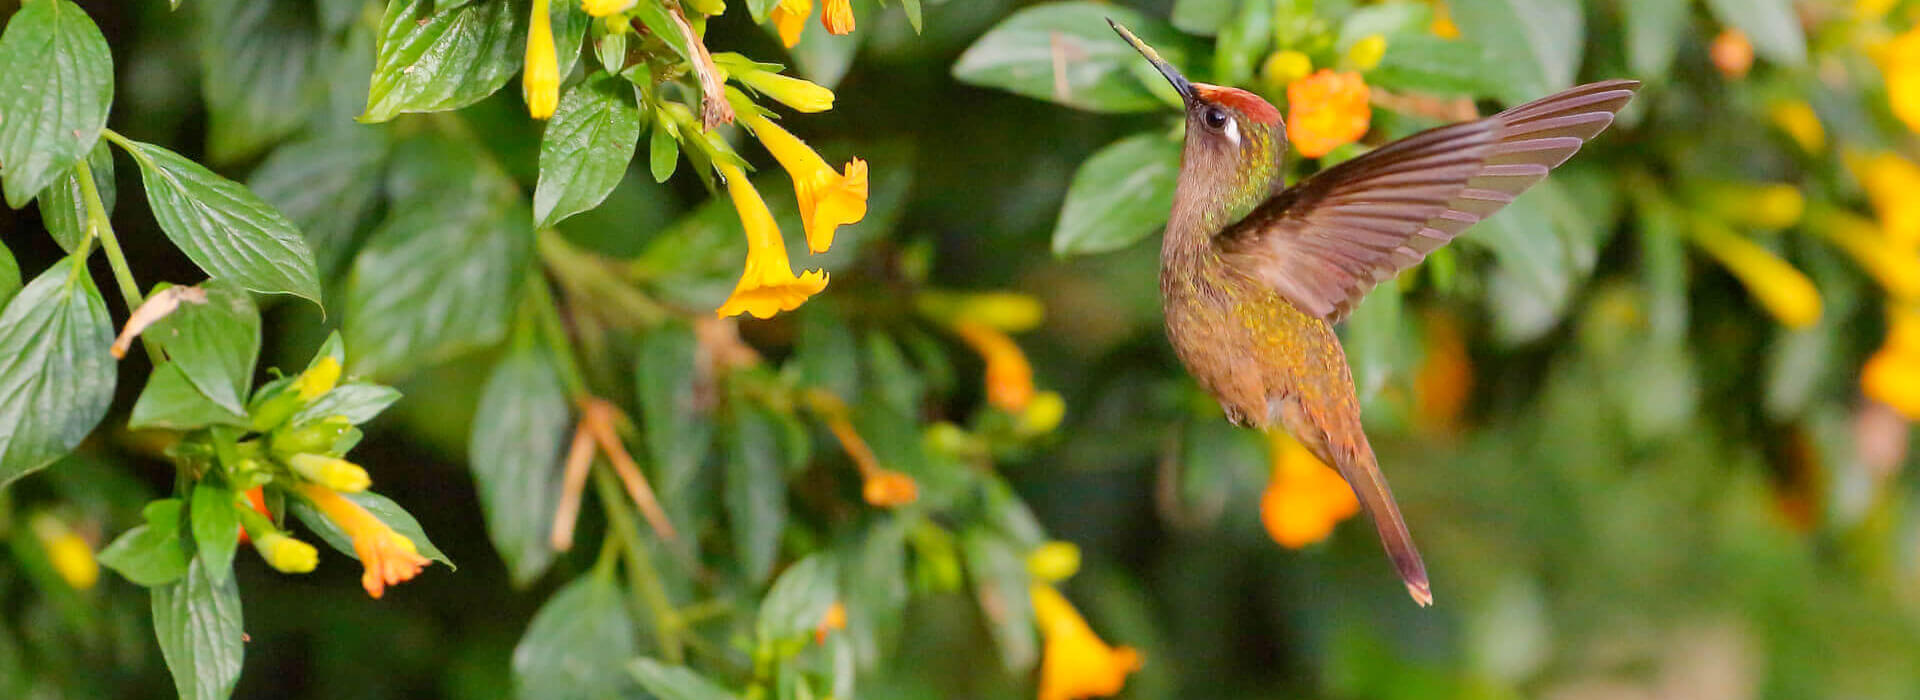 Blossomcrown Hummingbird hovering near flowers